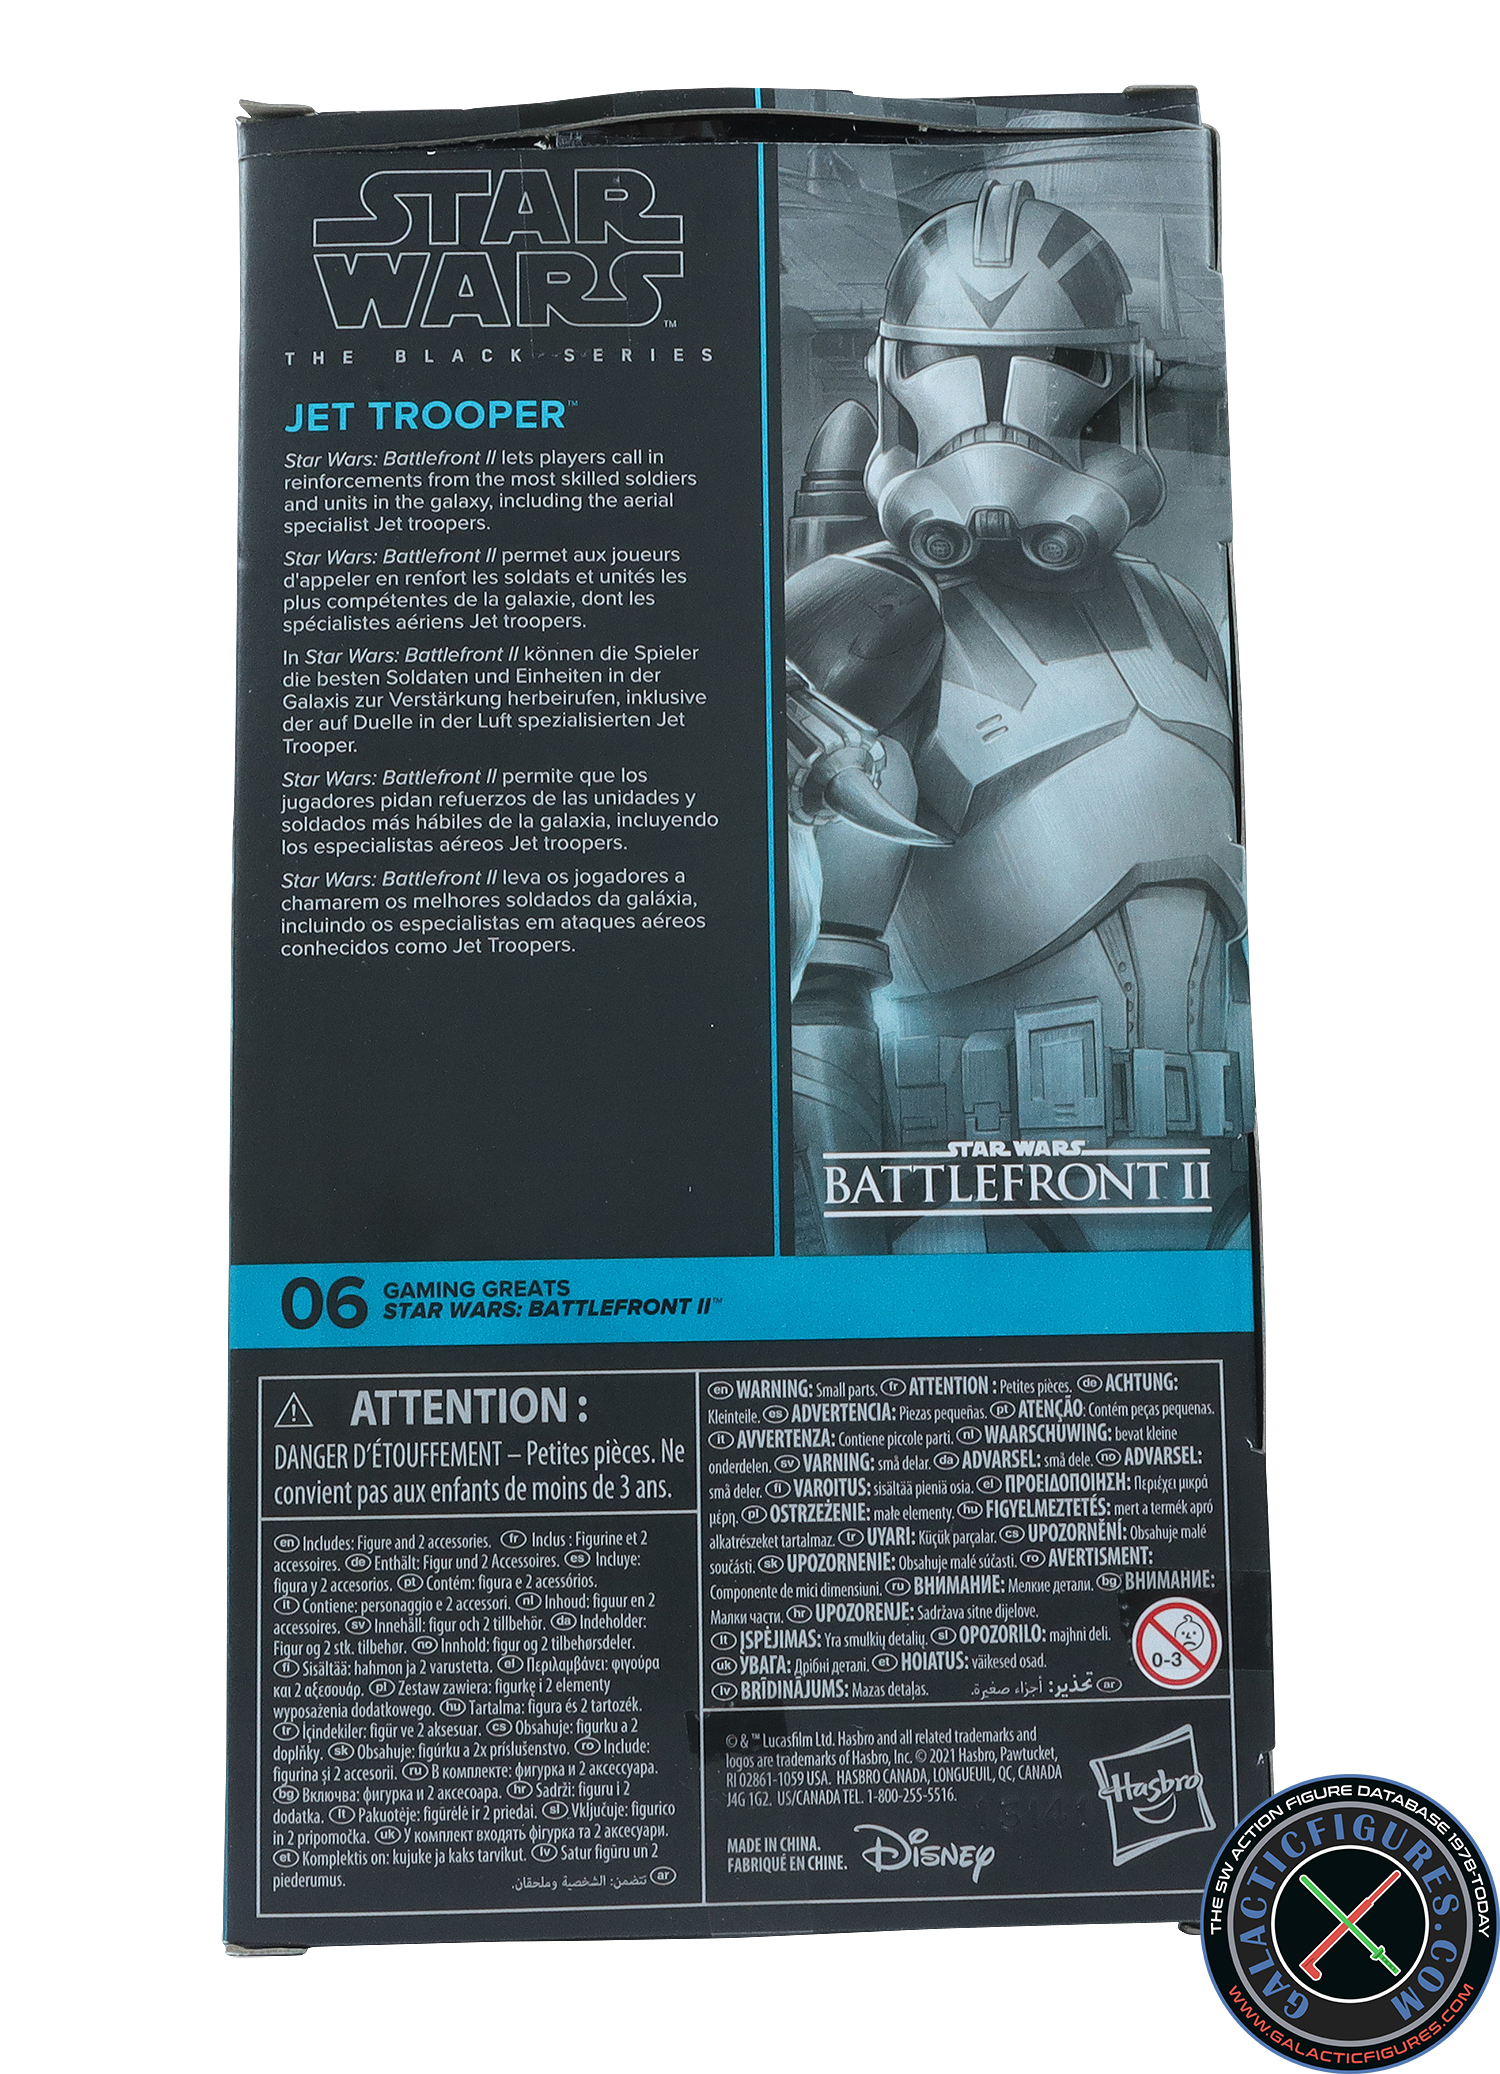 Jet Trooper Star Wars: Battlefront II